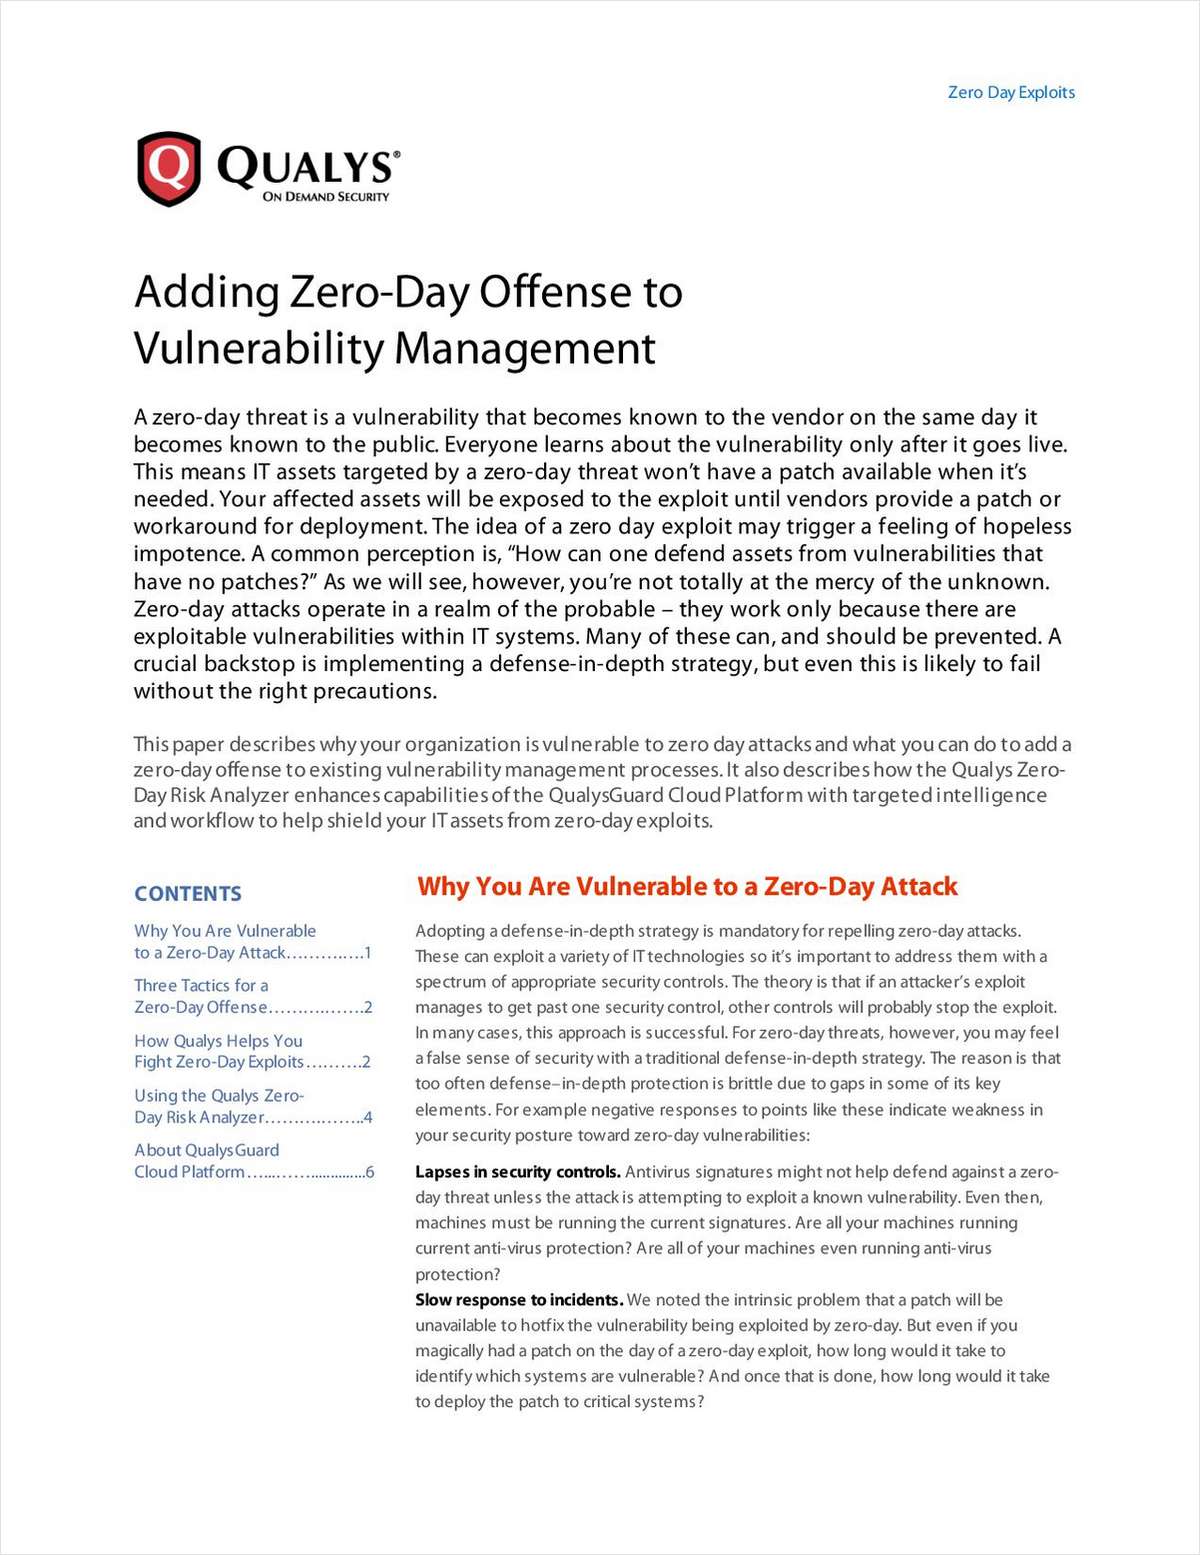 Adding Zero-Day Offense to Vulnerability Management